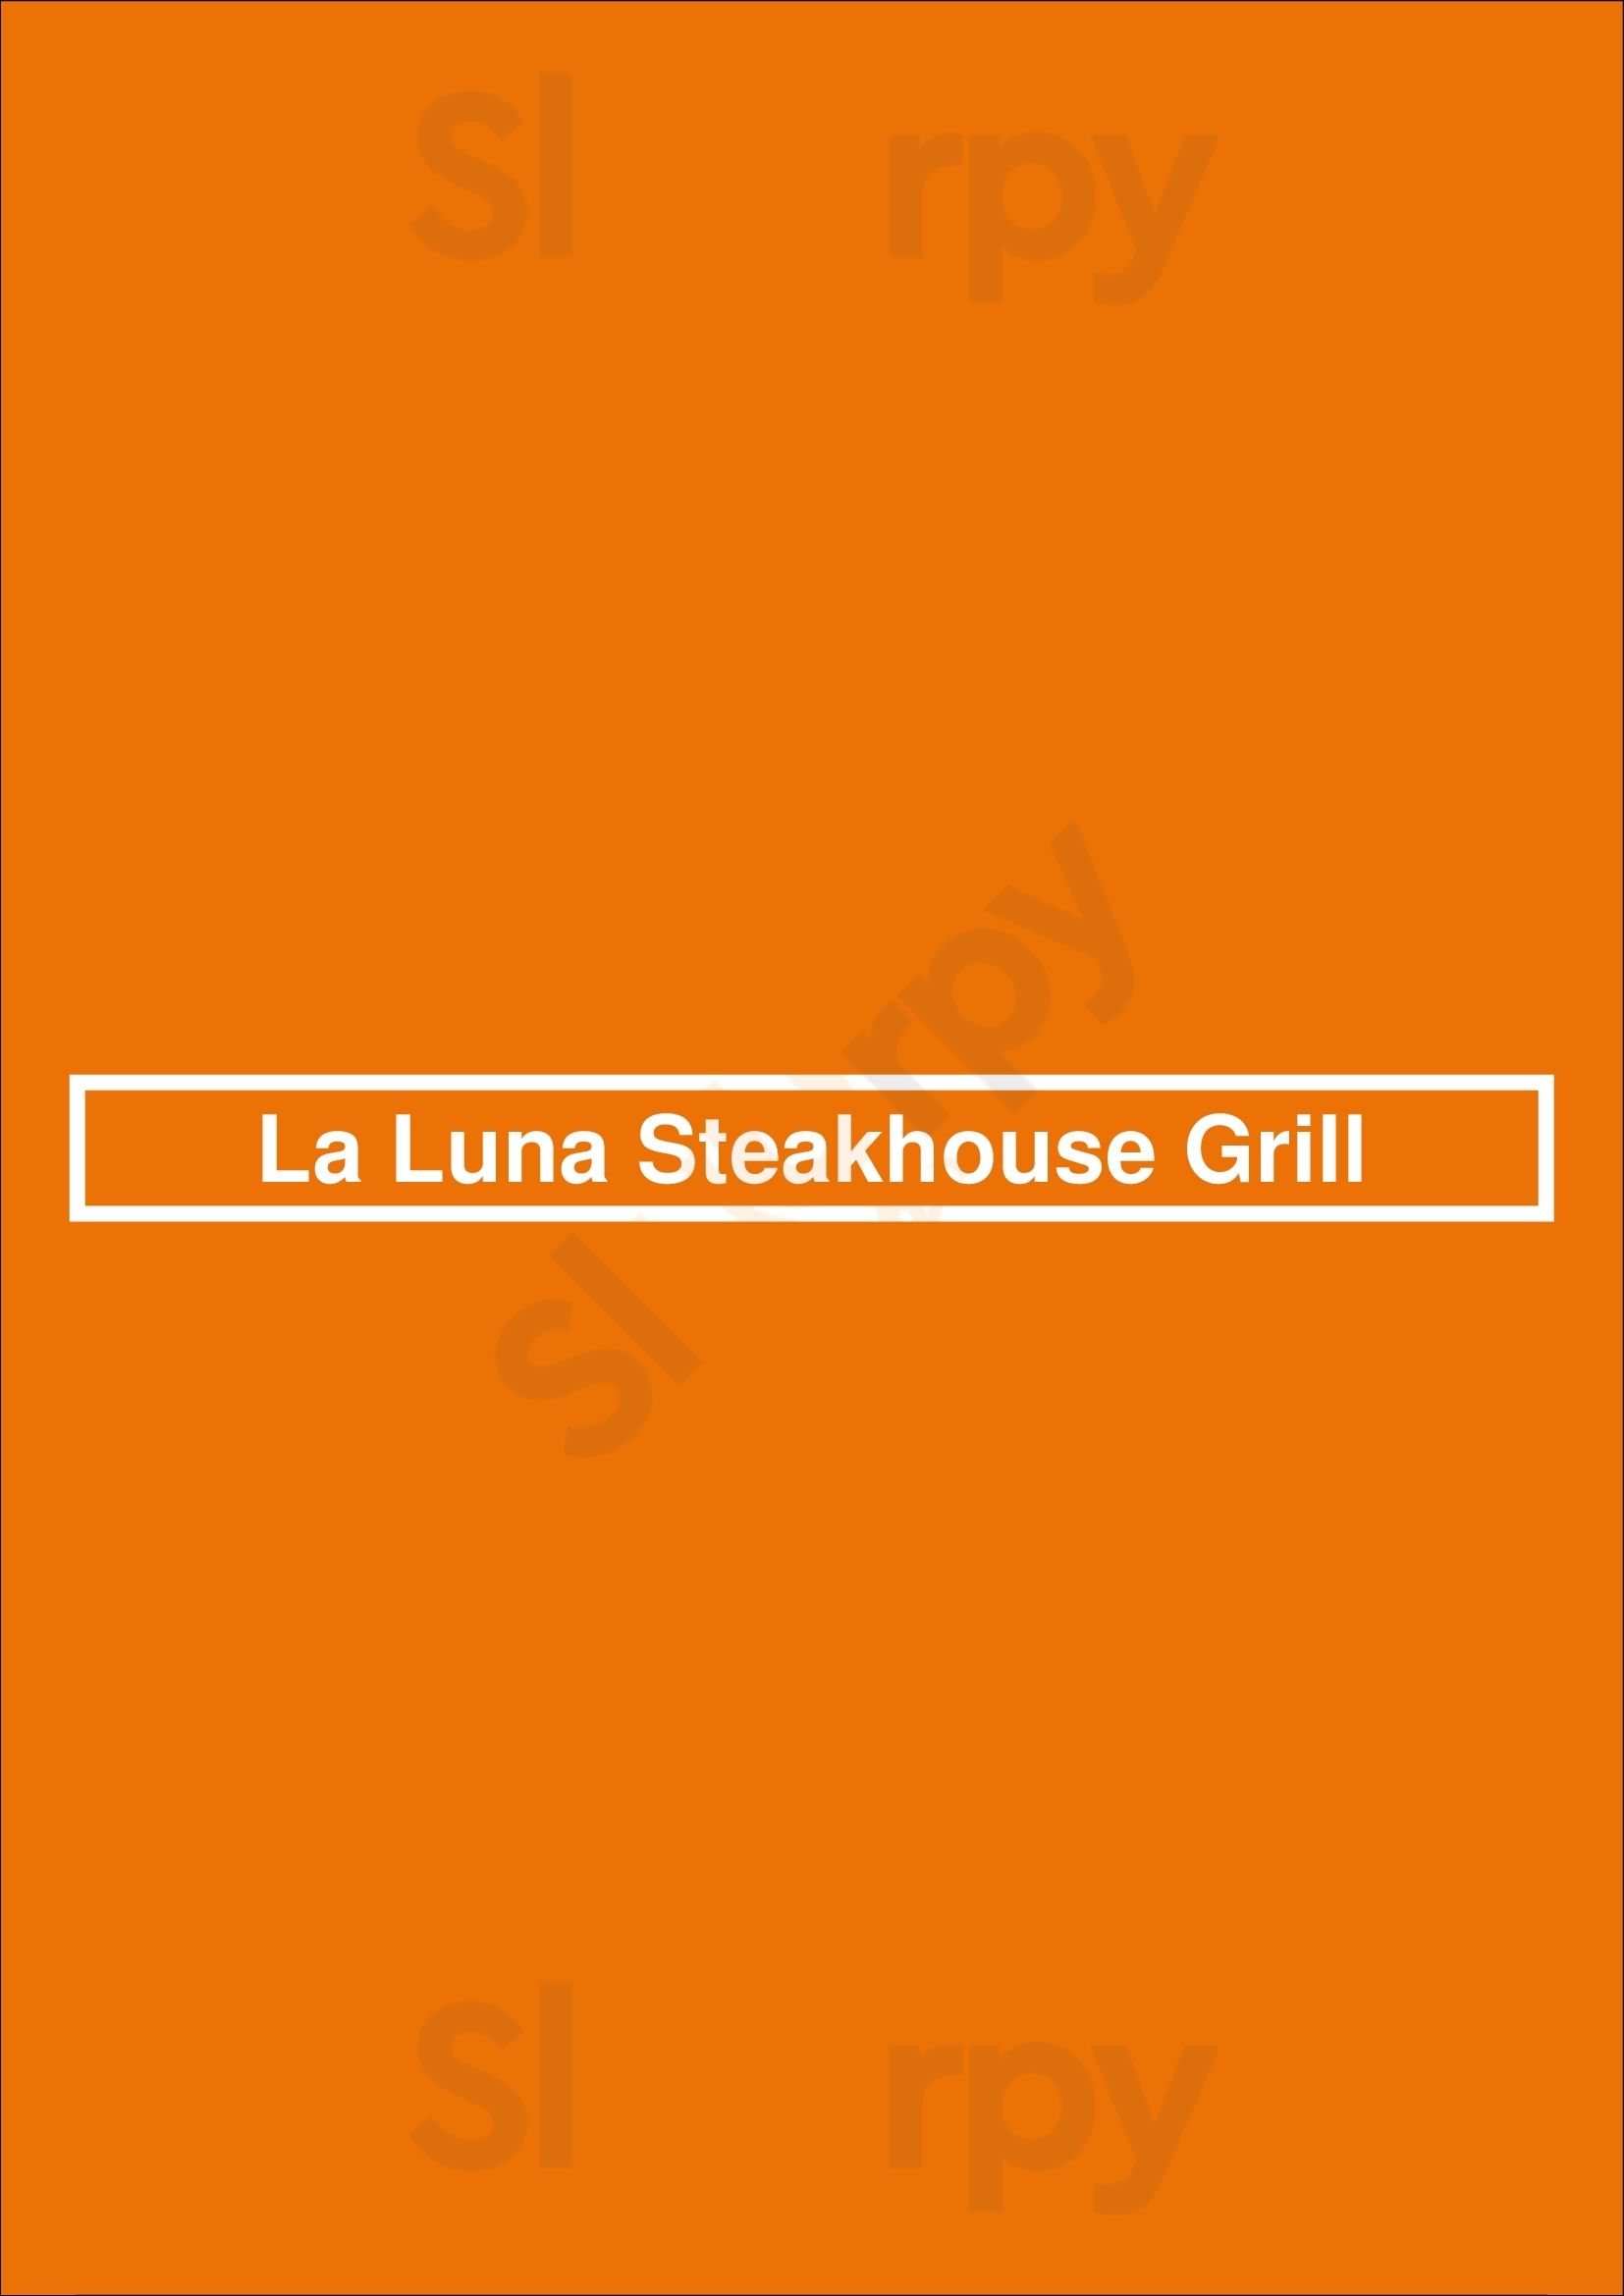 La Luna Steakhouse Grill Amsterdam Menu - 1